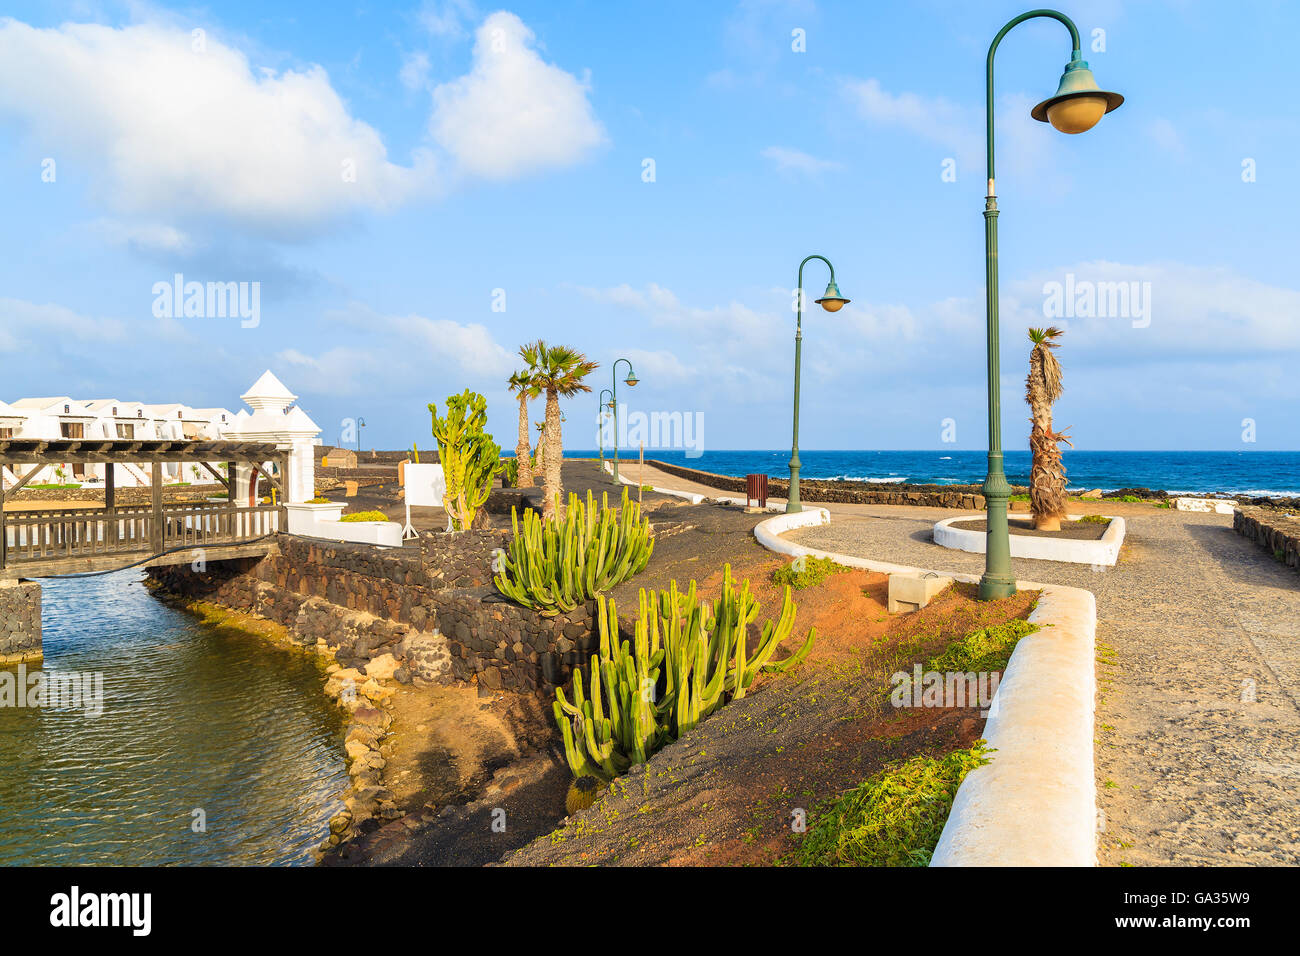 Coastal promenade along ocean in Costa Teguise seaside resort town, Lanzarote, Canary Islands, Spain Stock Photo